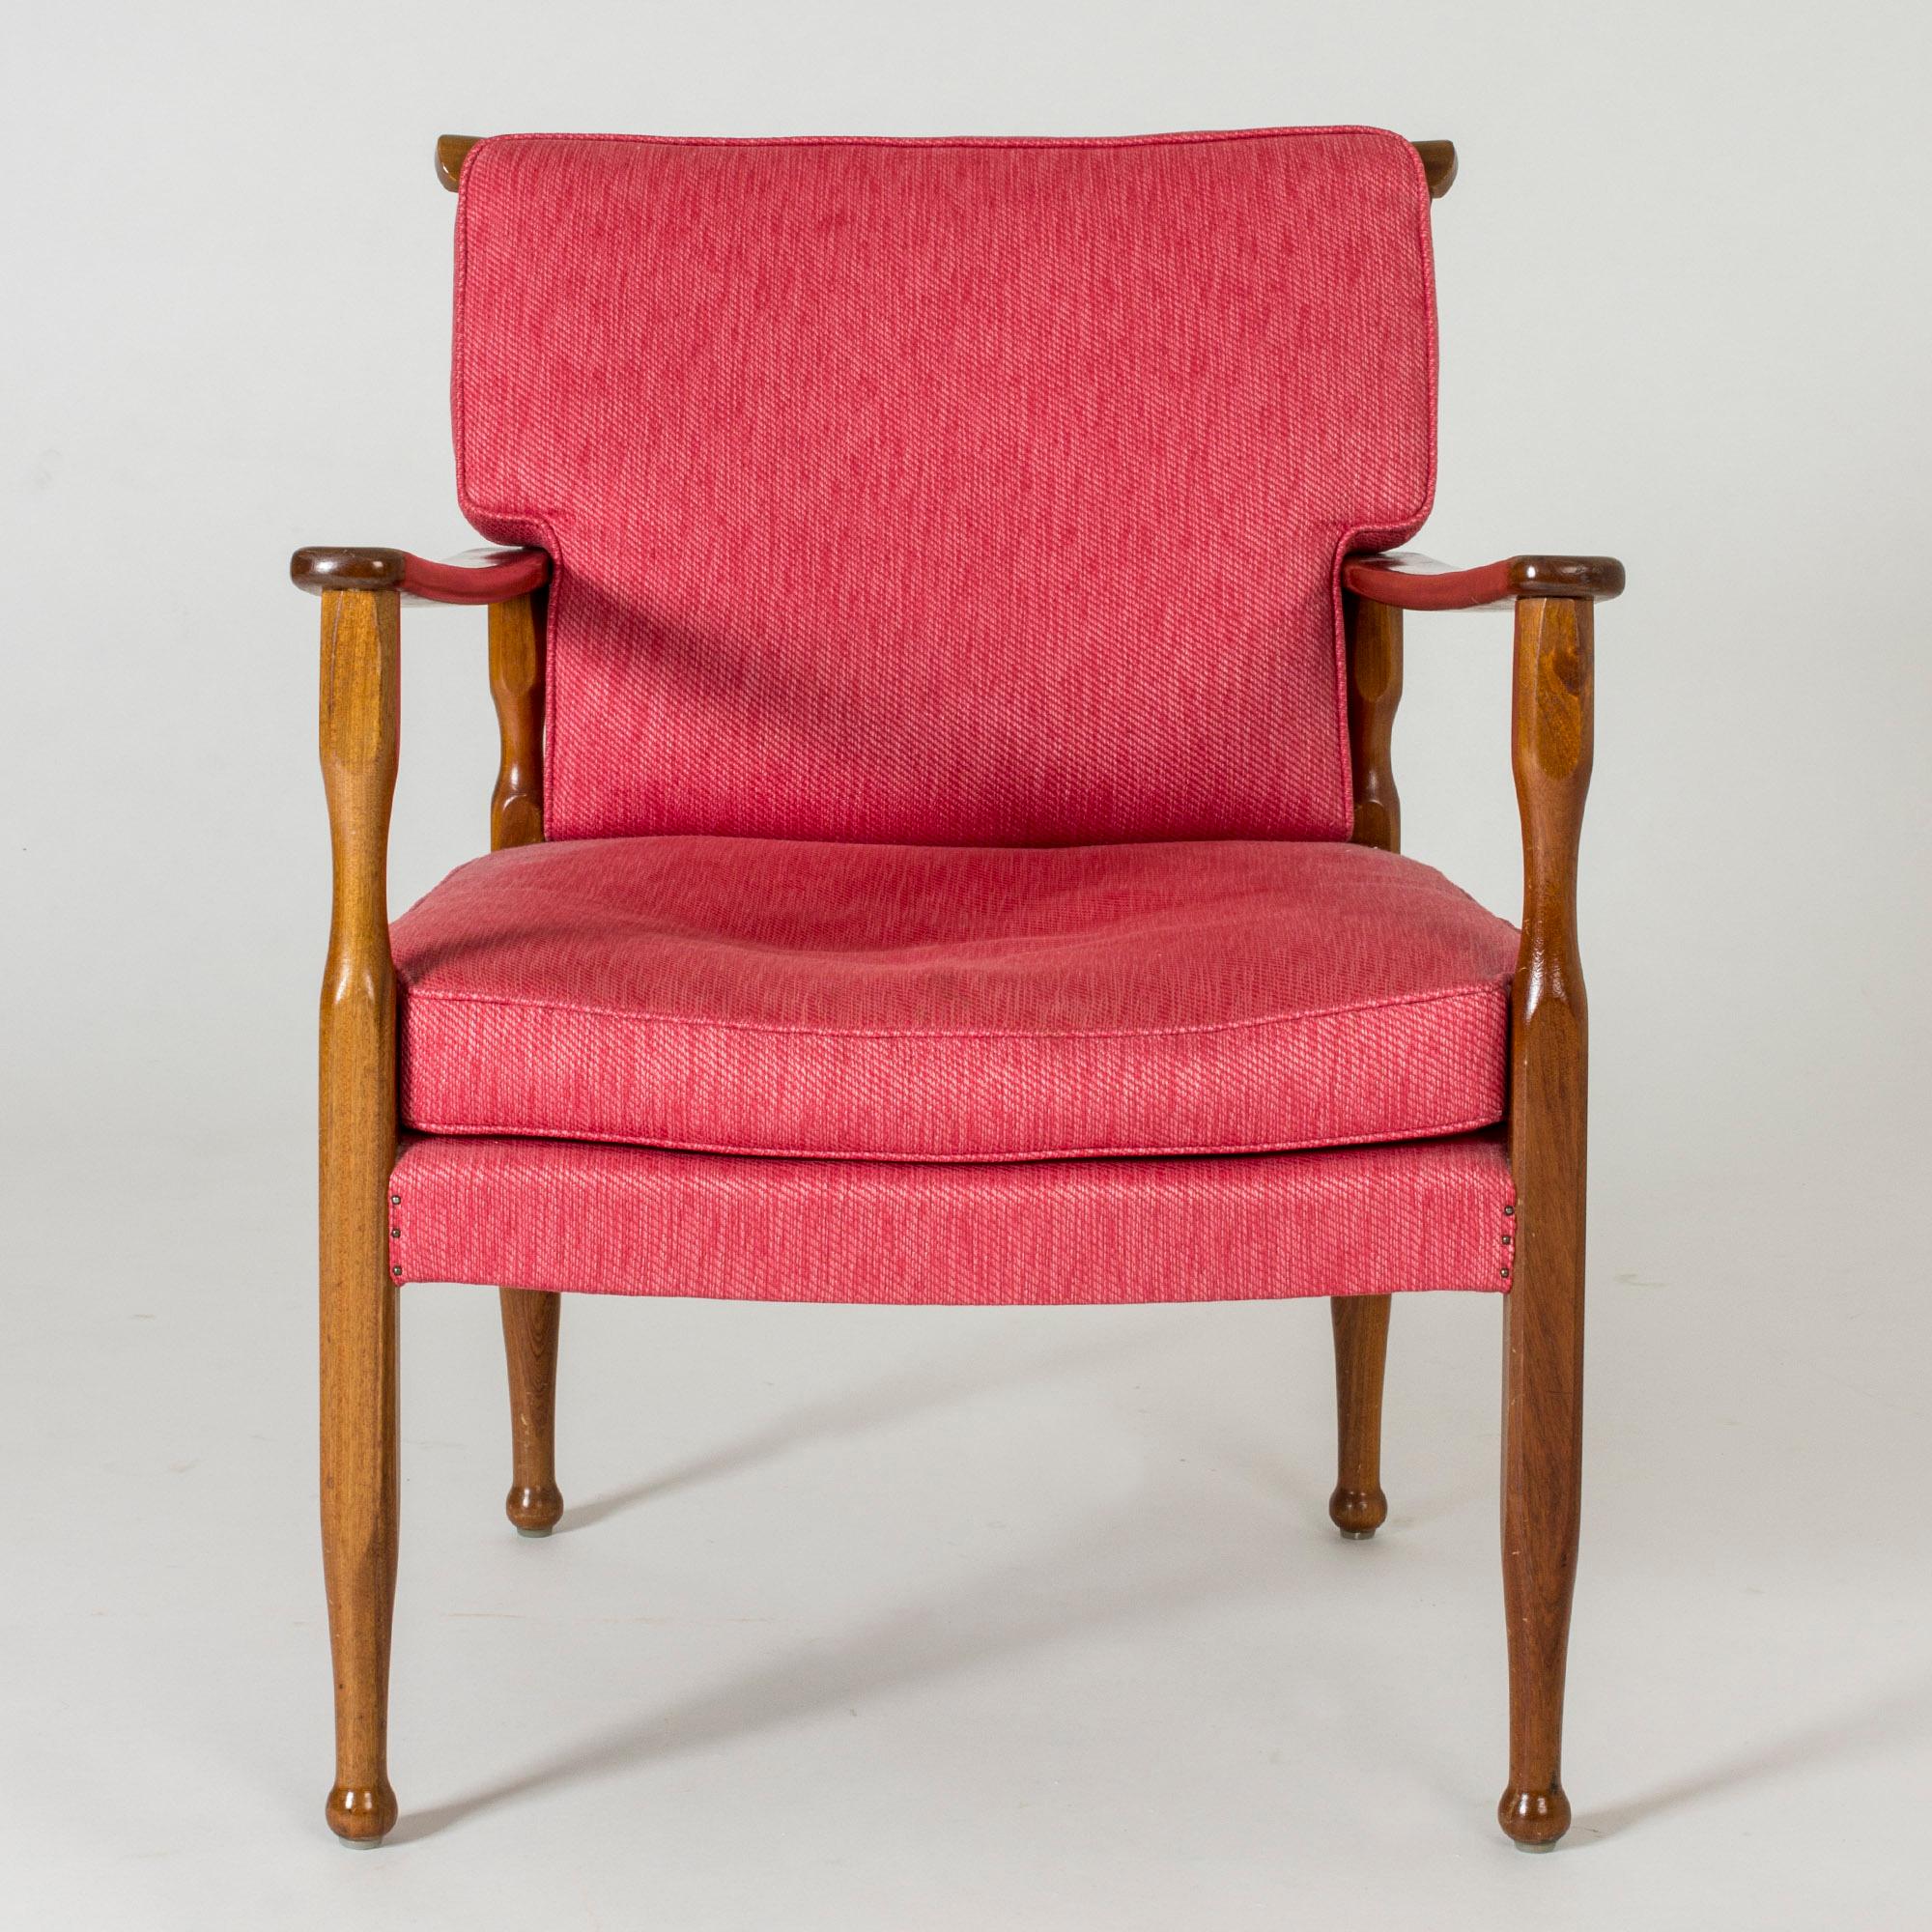 Swedish Mahogany Lounge Chair by Josef Frank for Svenskt Tenn, Sweden, 1950s